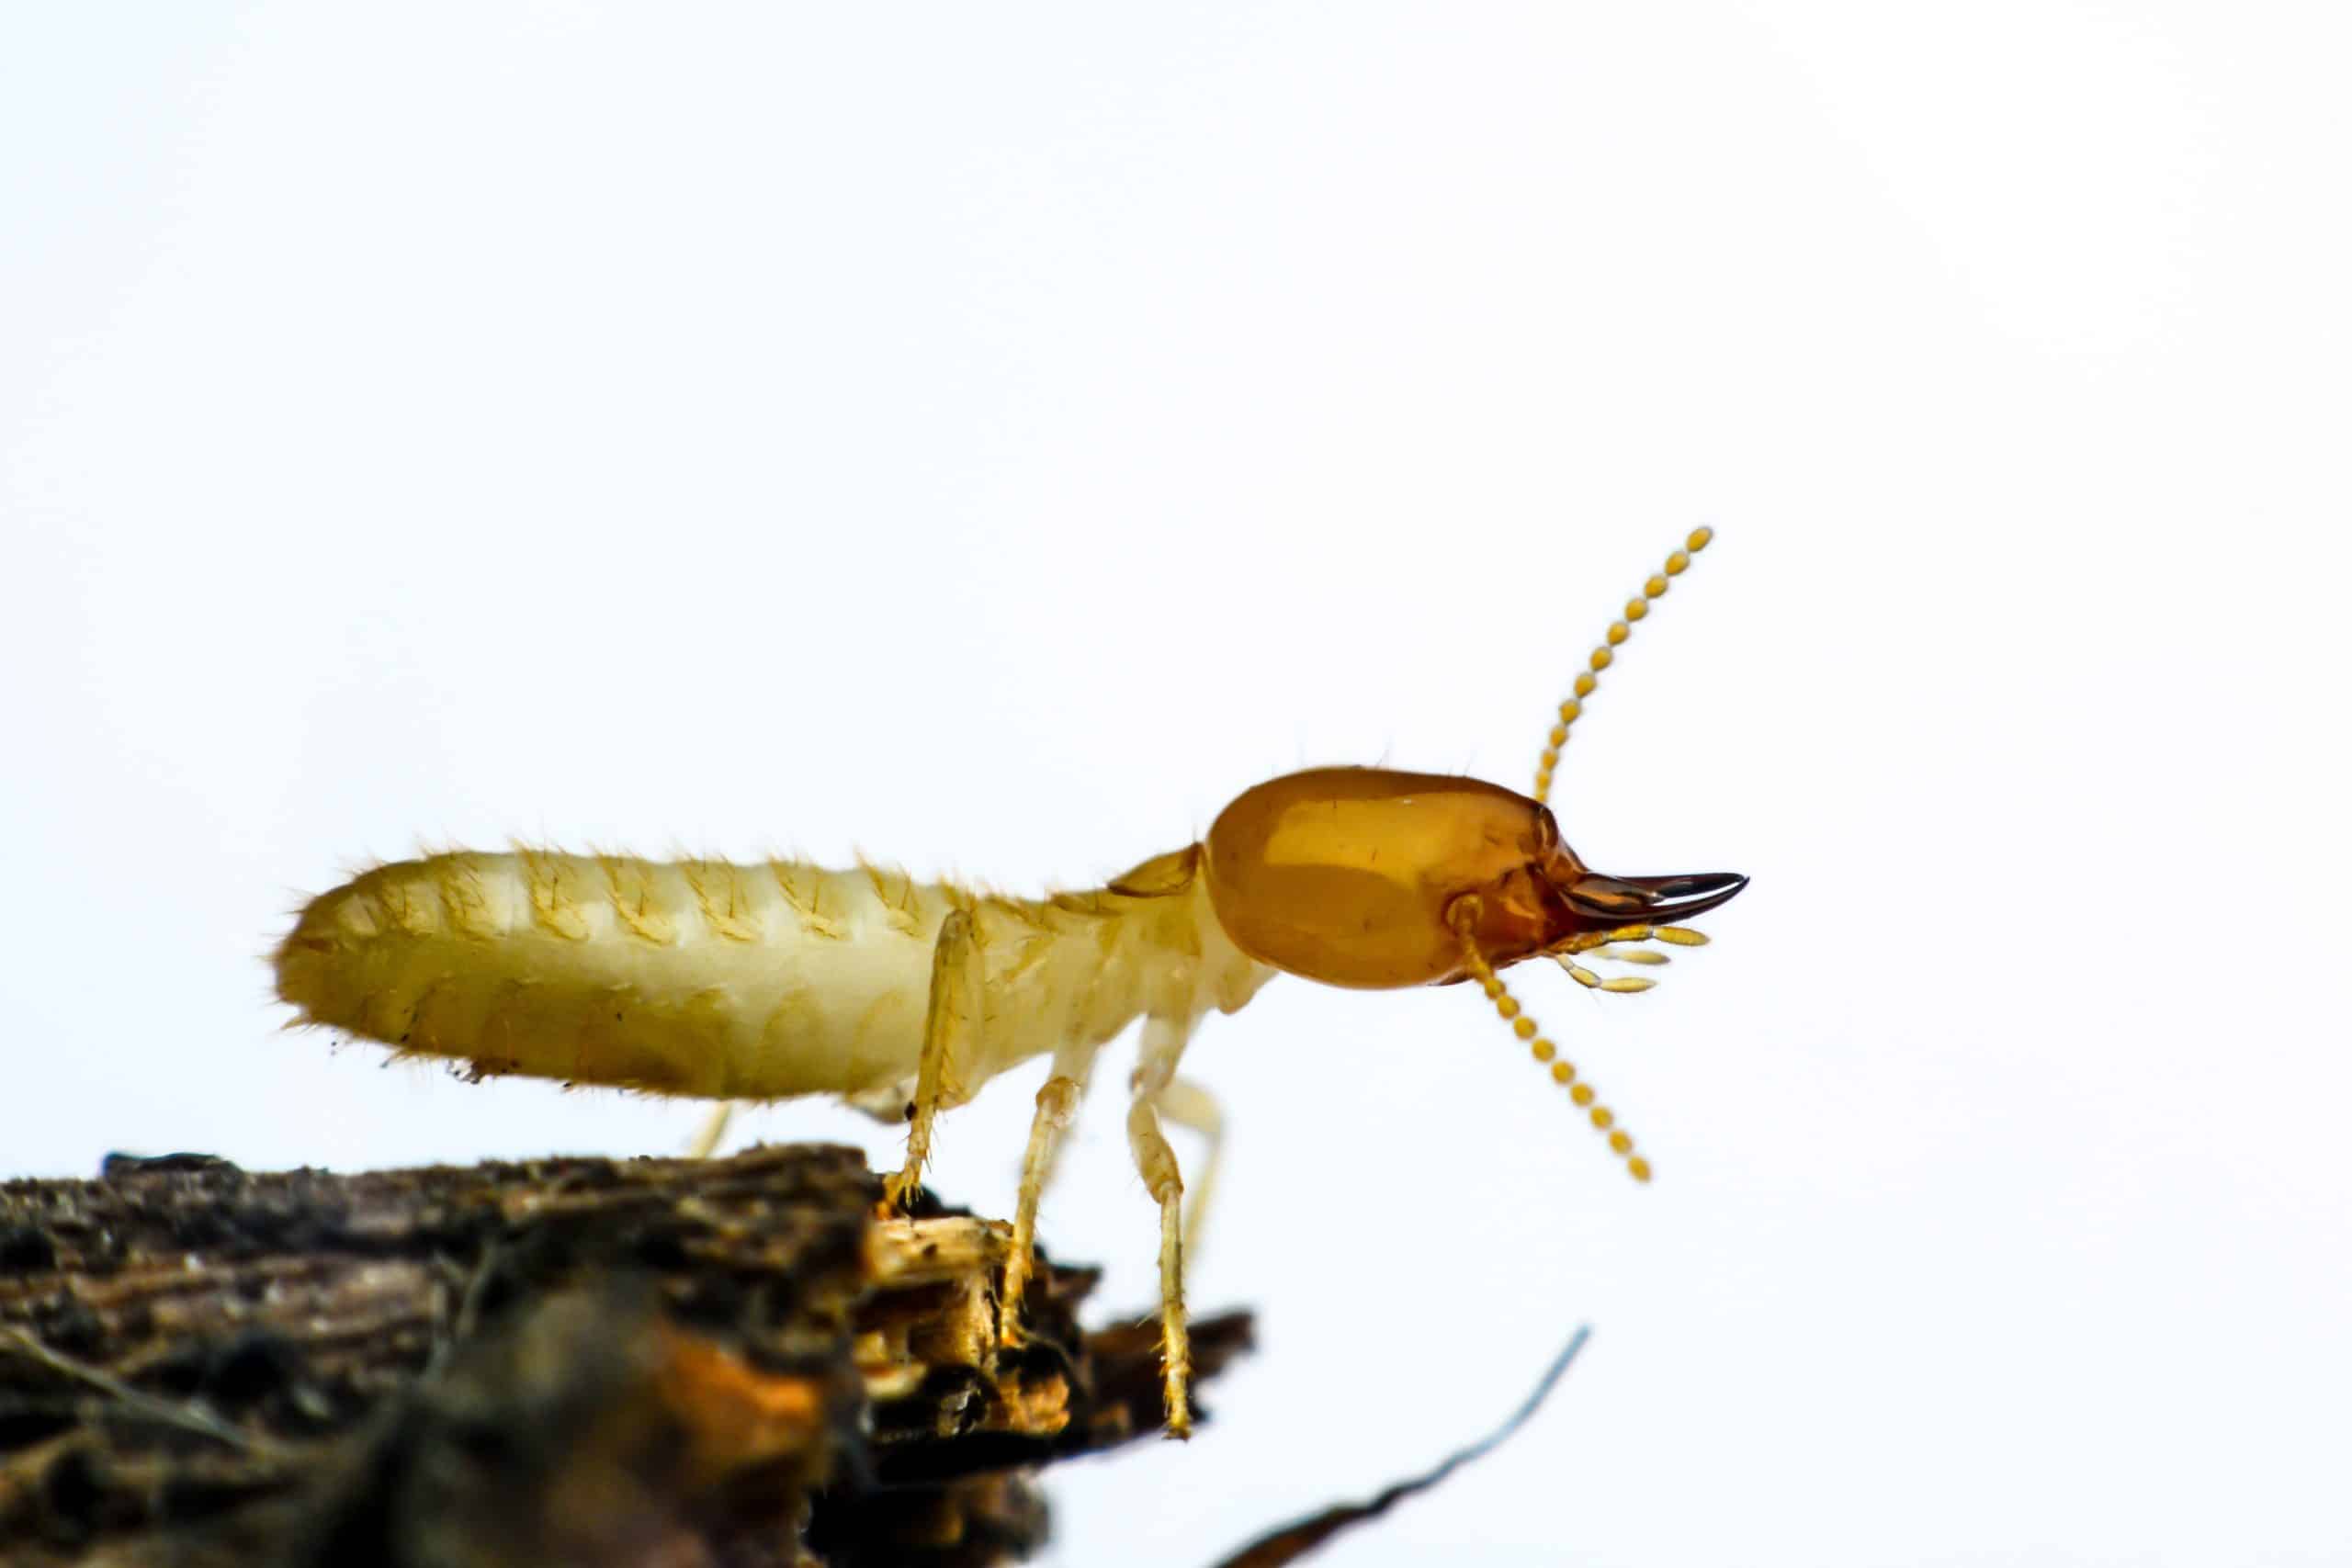 Termites in arizona